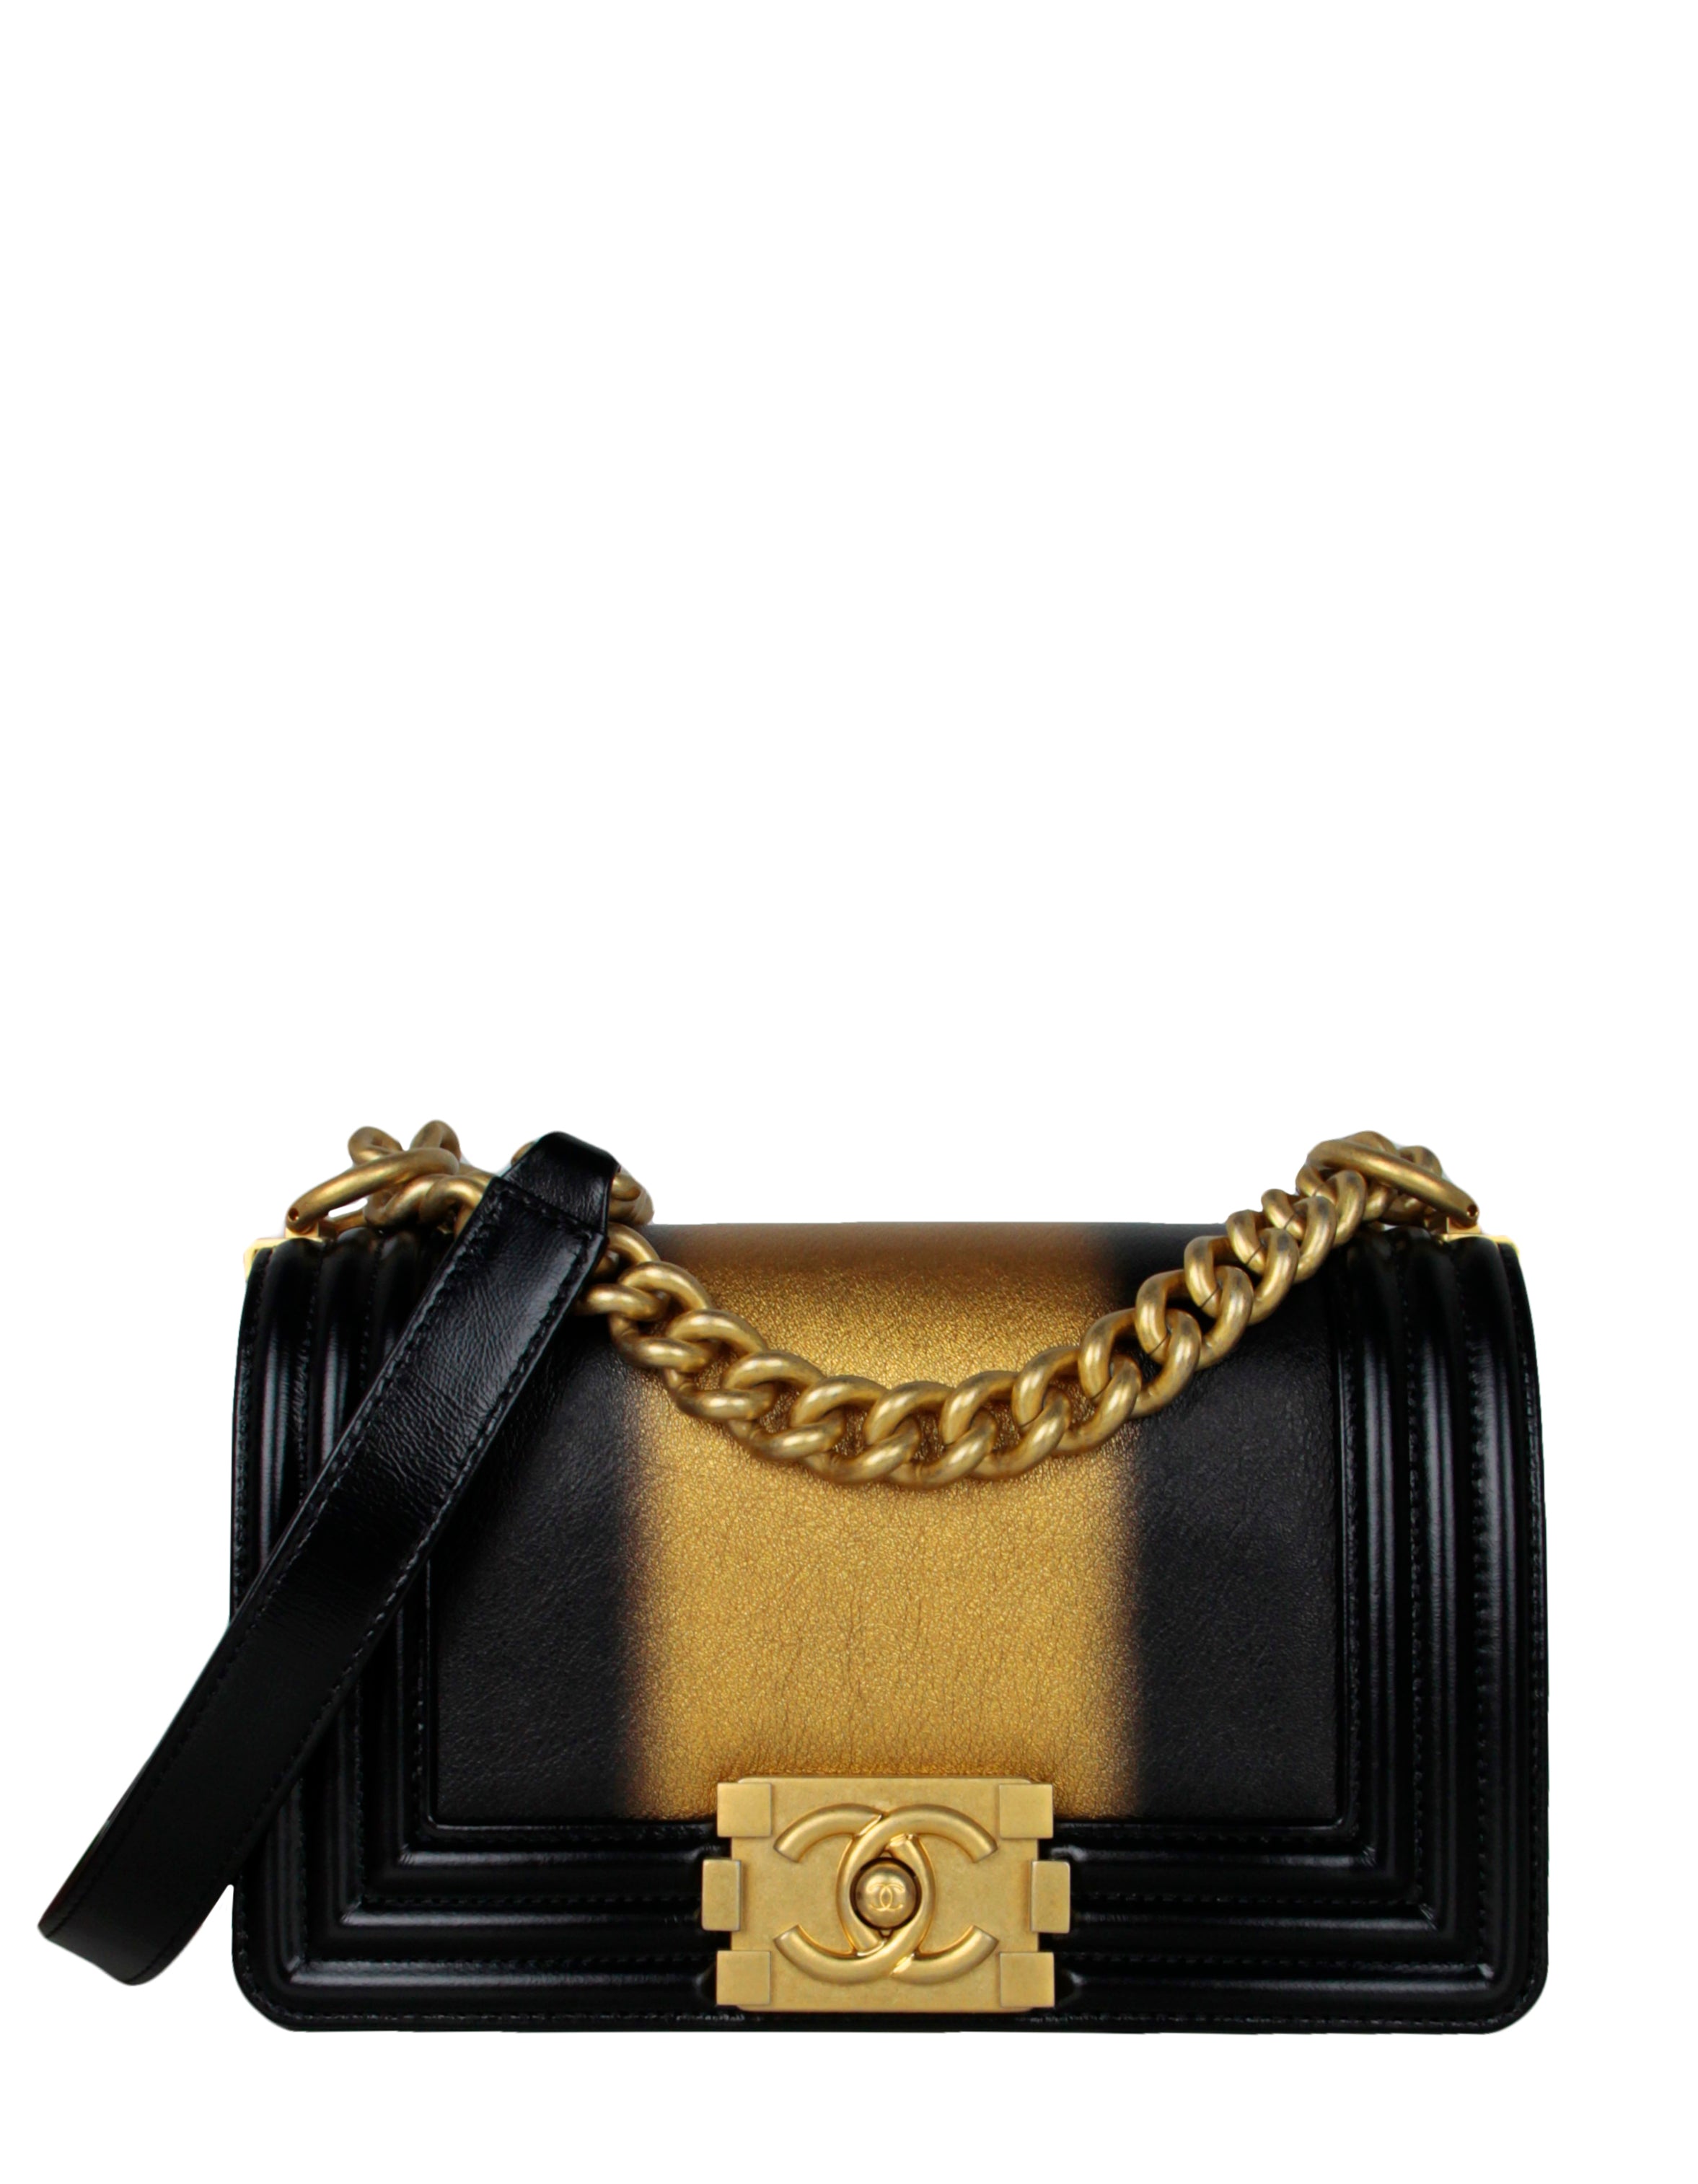 Chanel 2021 Calfskin Leather Metallic Black/Gold Small Boy Bag